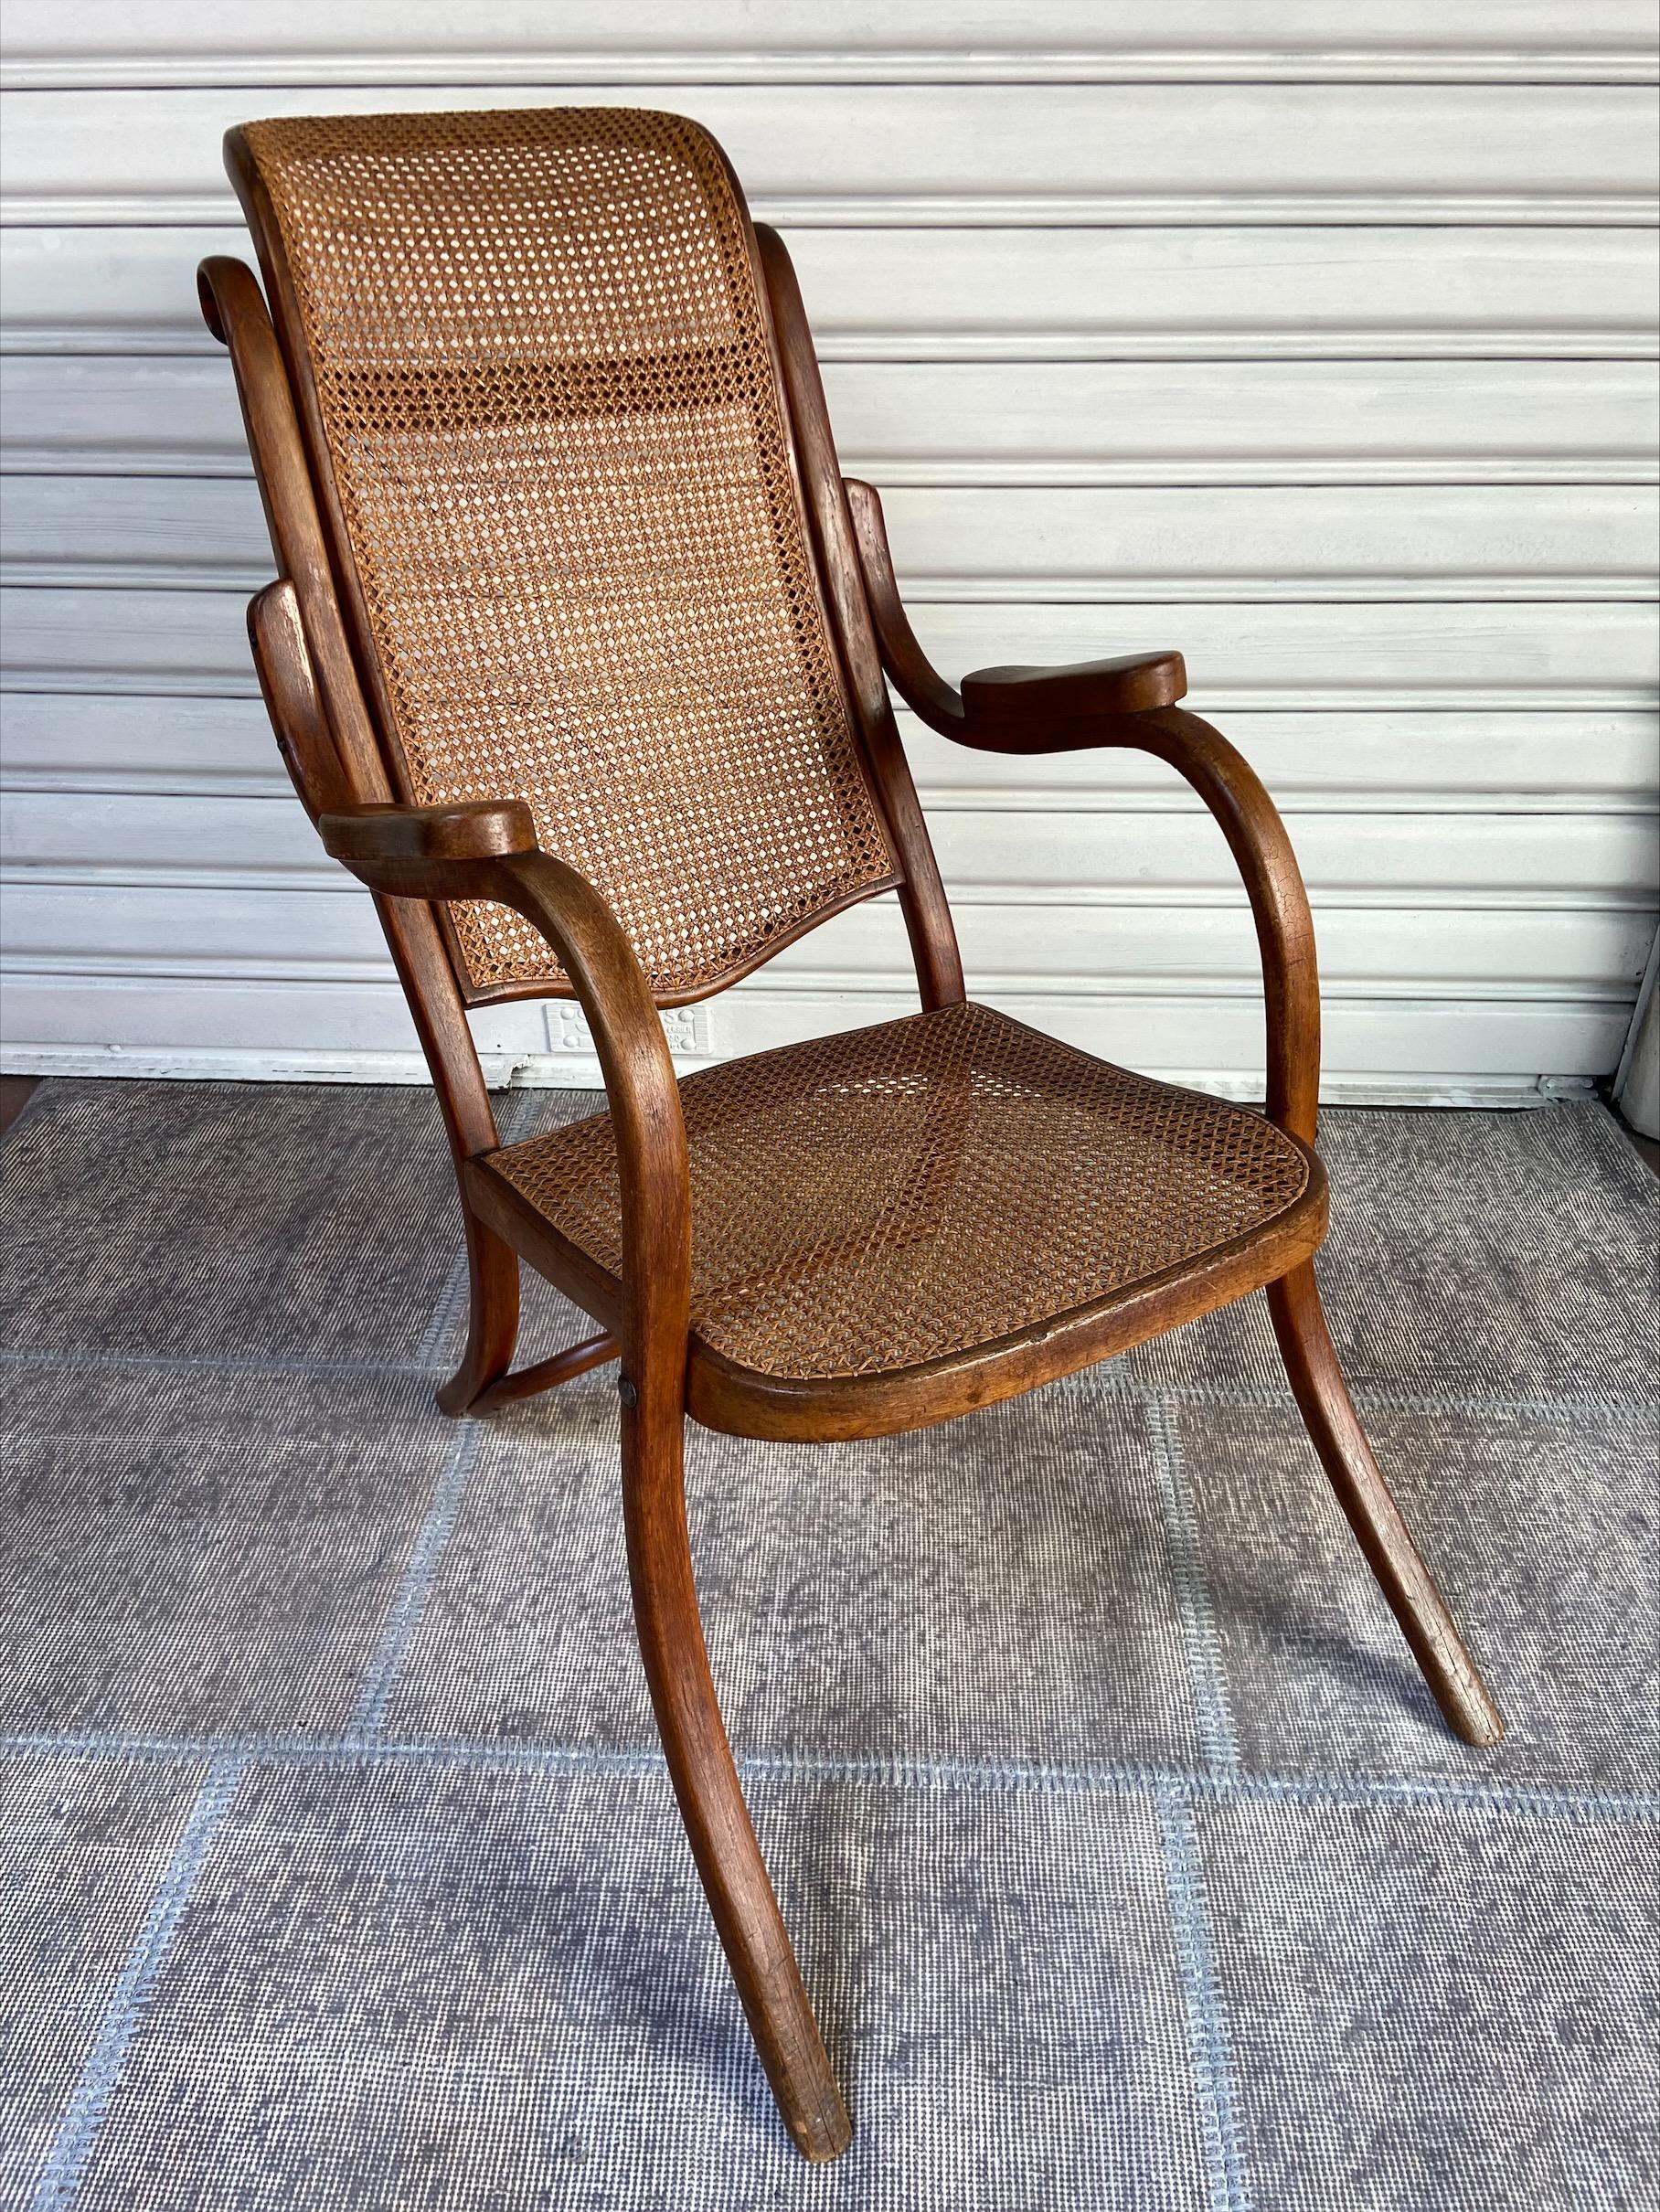 Armchair - Michael Thonet 
Wood and rattan 
Circa 1865
Very good condition 
H99xW54,5xD87cm
1900€.